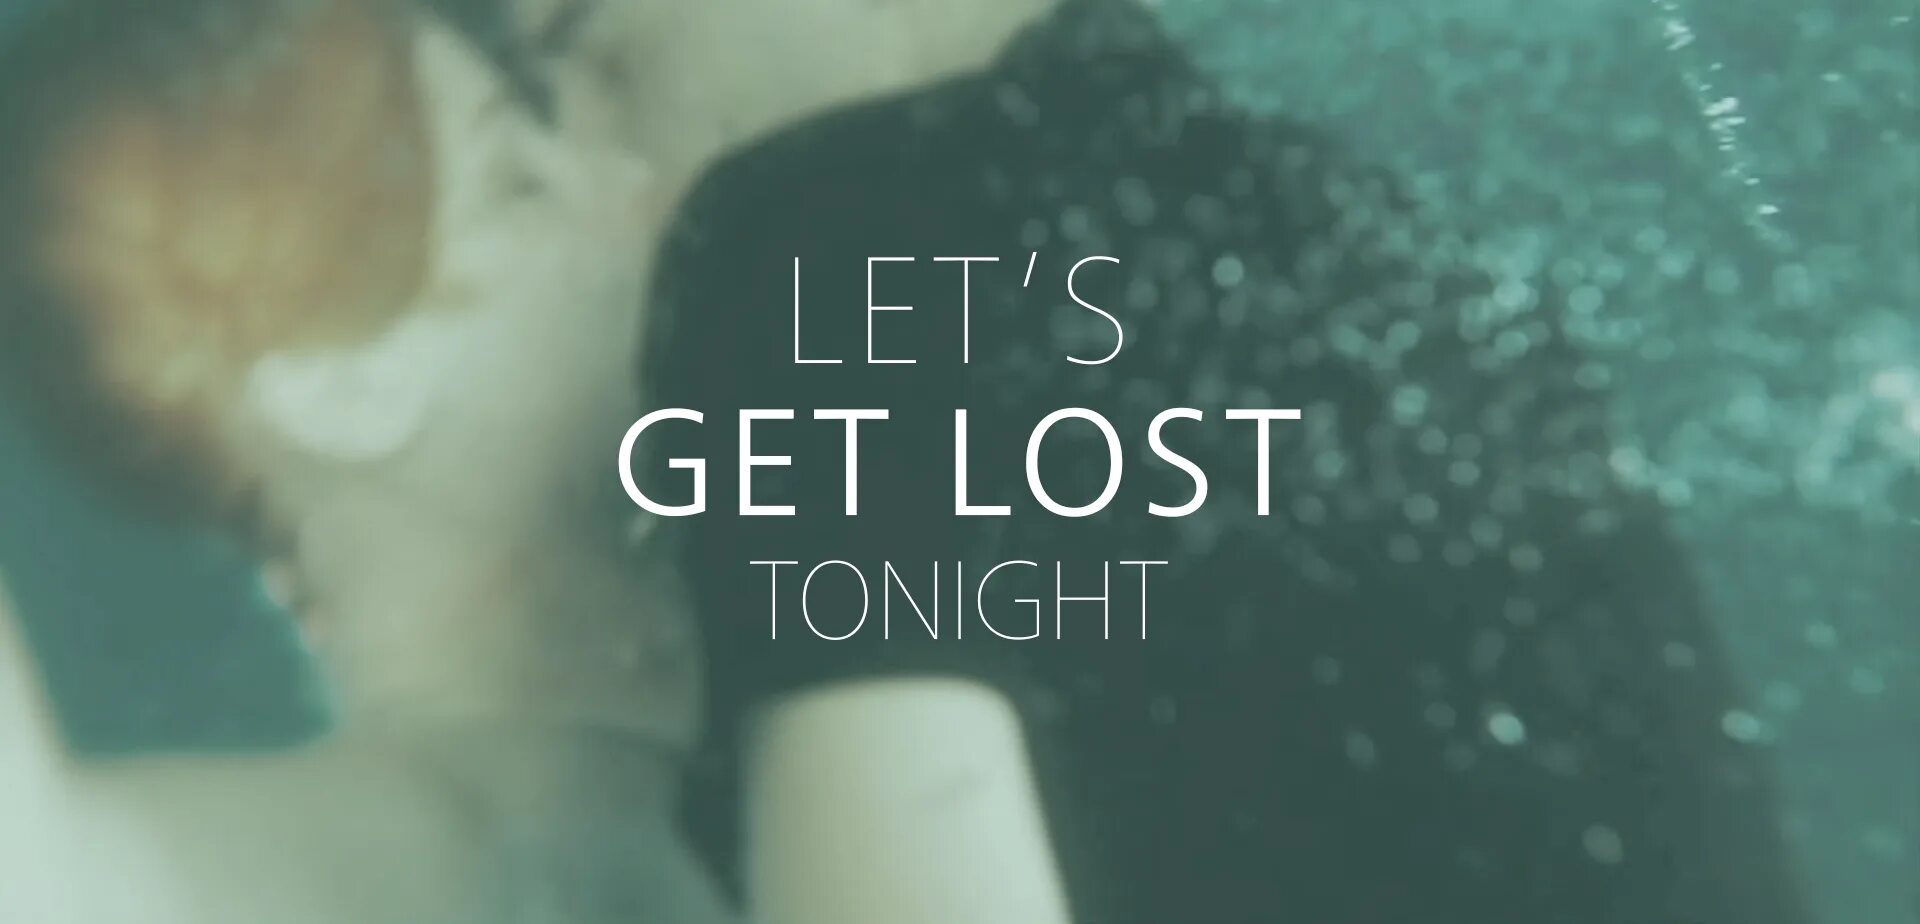 G-Eazy feat. Devon Baldwin - Let's get Lost. To get Lost. Fancy - get Lost Tonight. Do you get lost